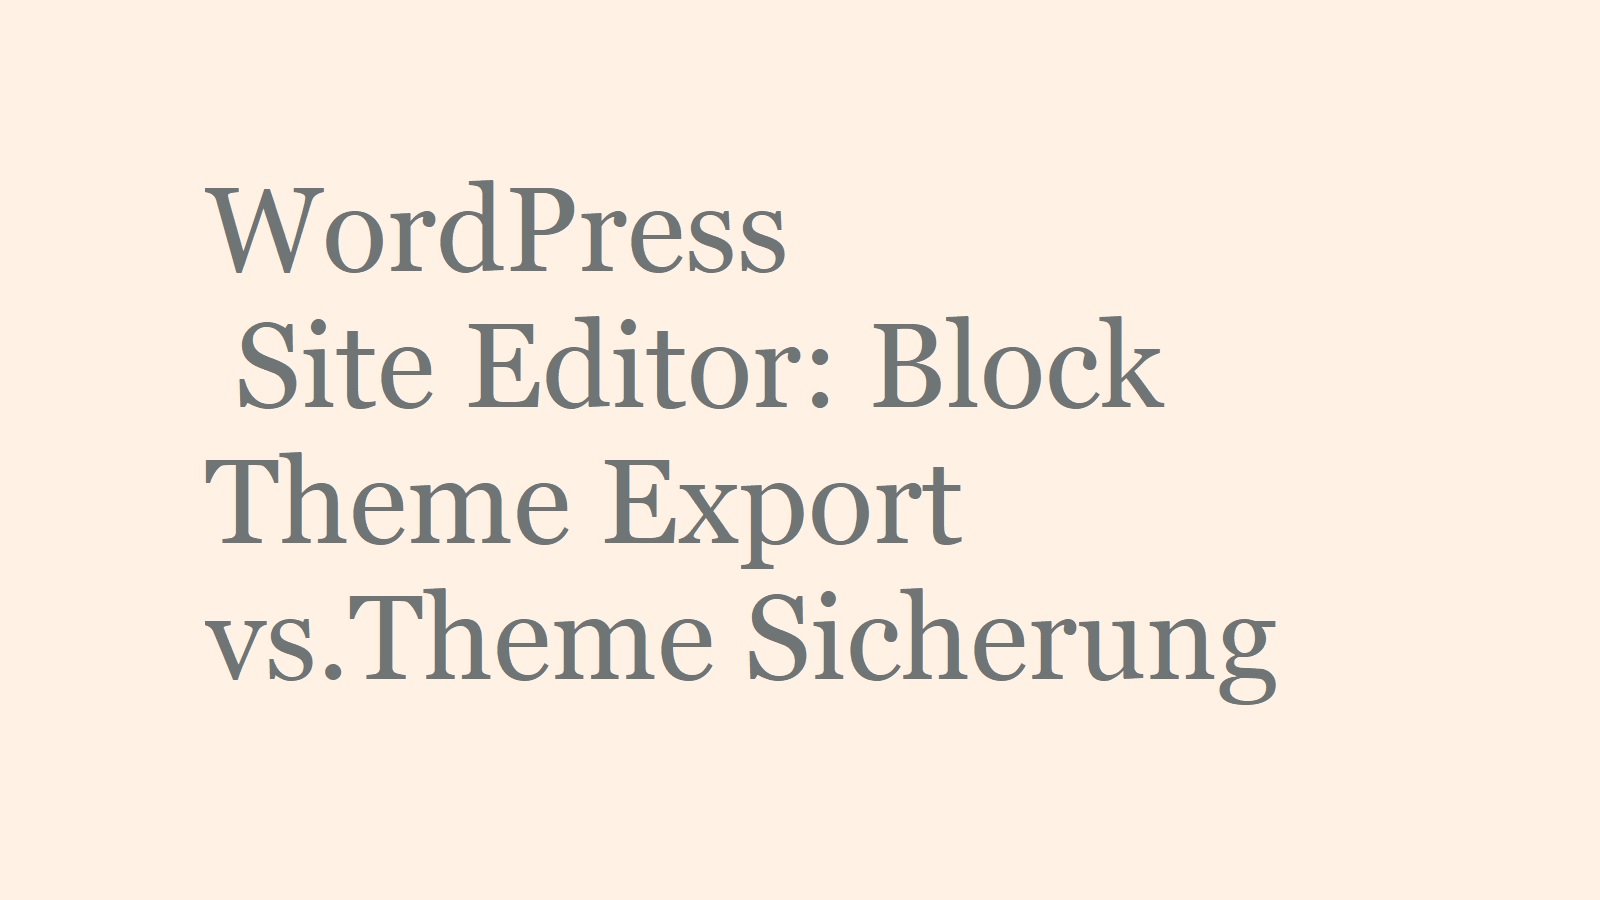 WordPress Site Editor: Block Theme Export vs.Theme Sicherung